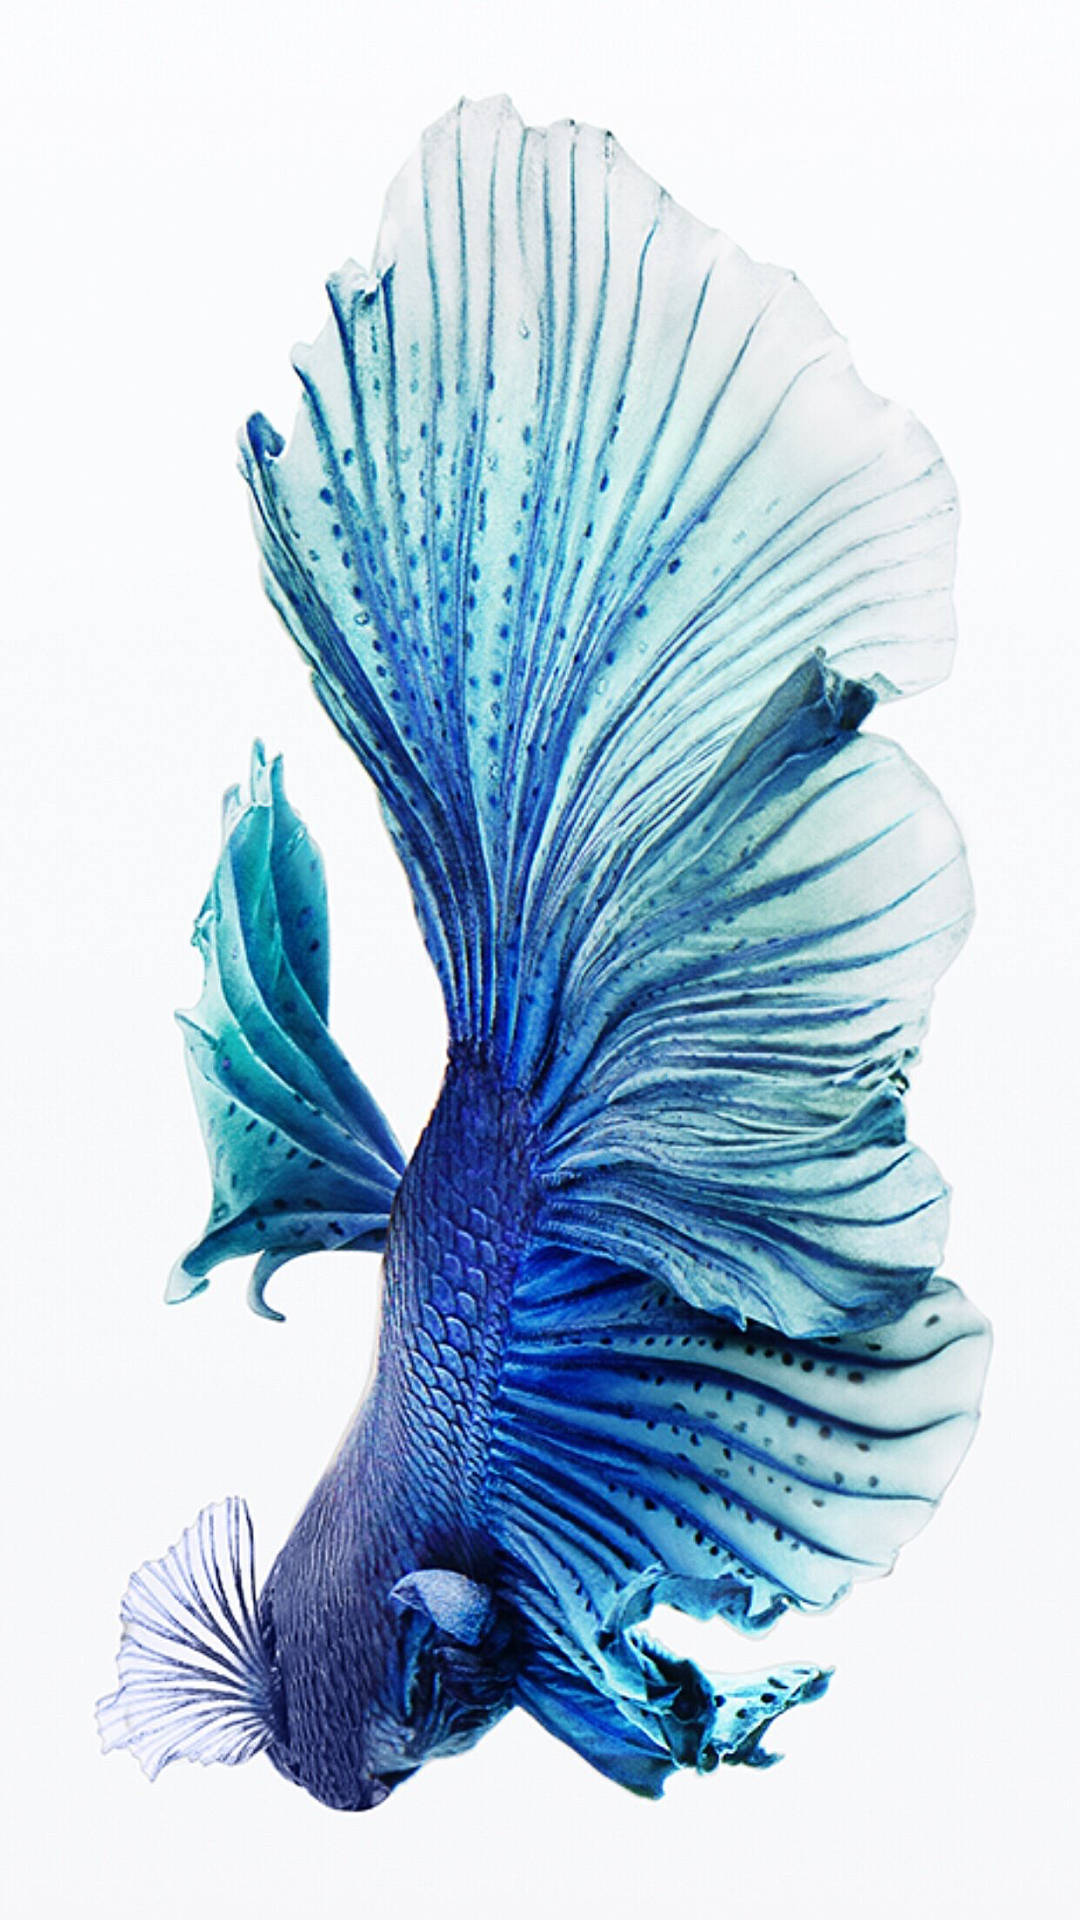 Blauersiamesischer Kampffisch Iphone Wallpaper